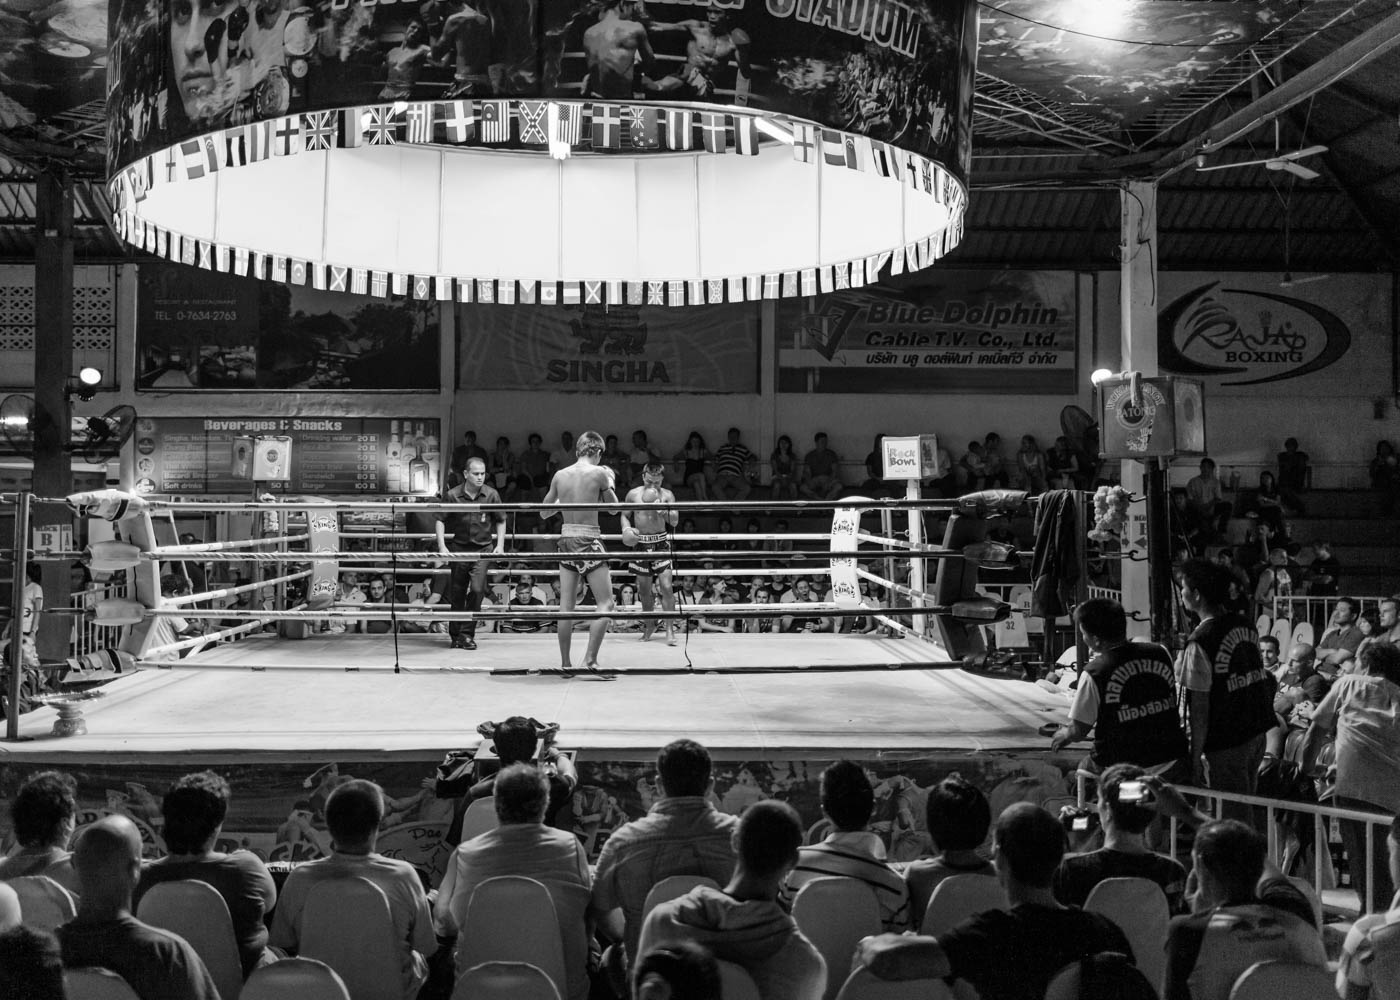 Fight night at the Patong Boxing Stadium - Phuket - Thailand